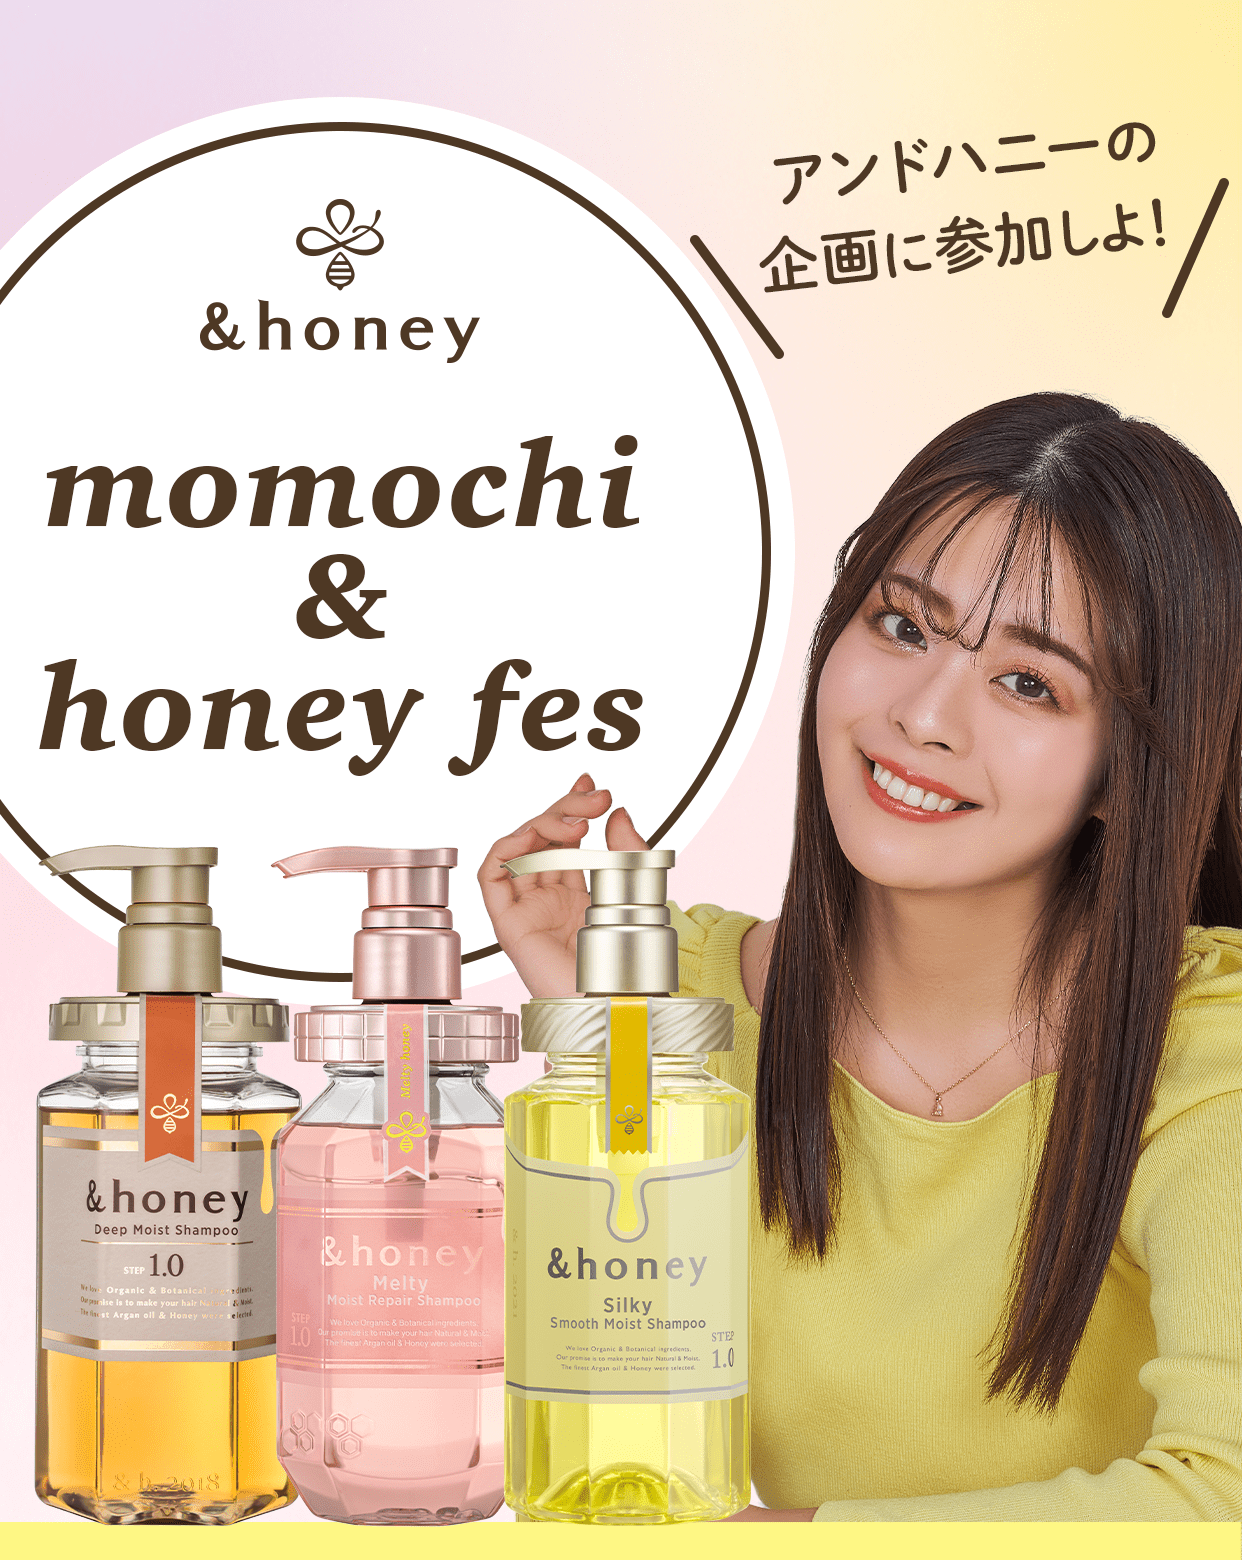 momochi & honey fes